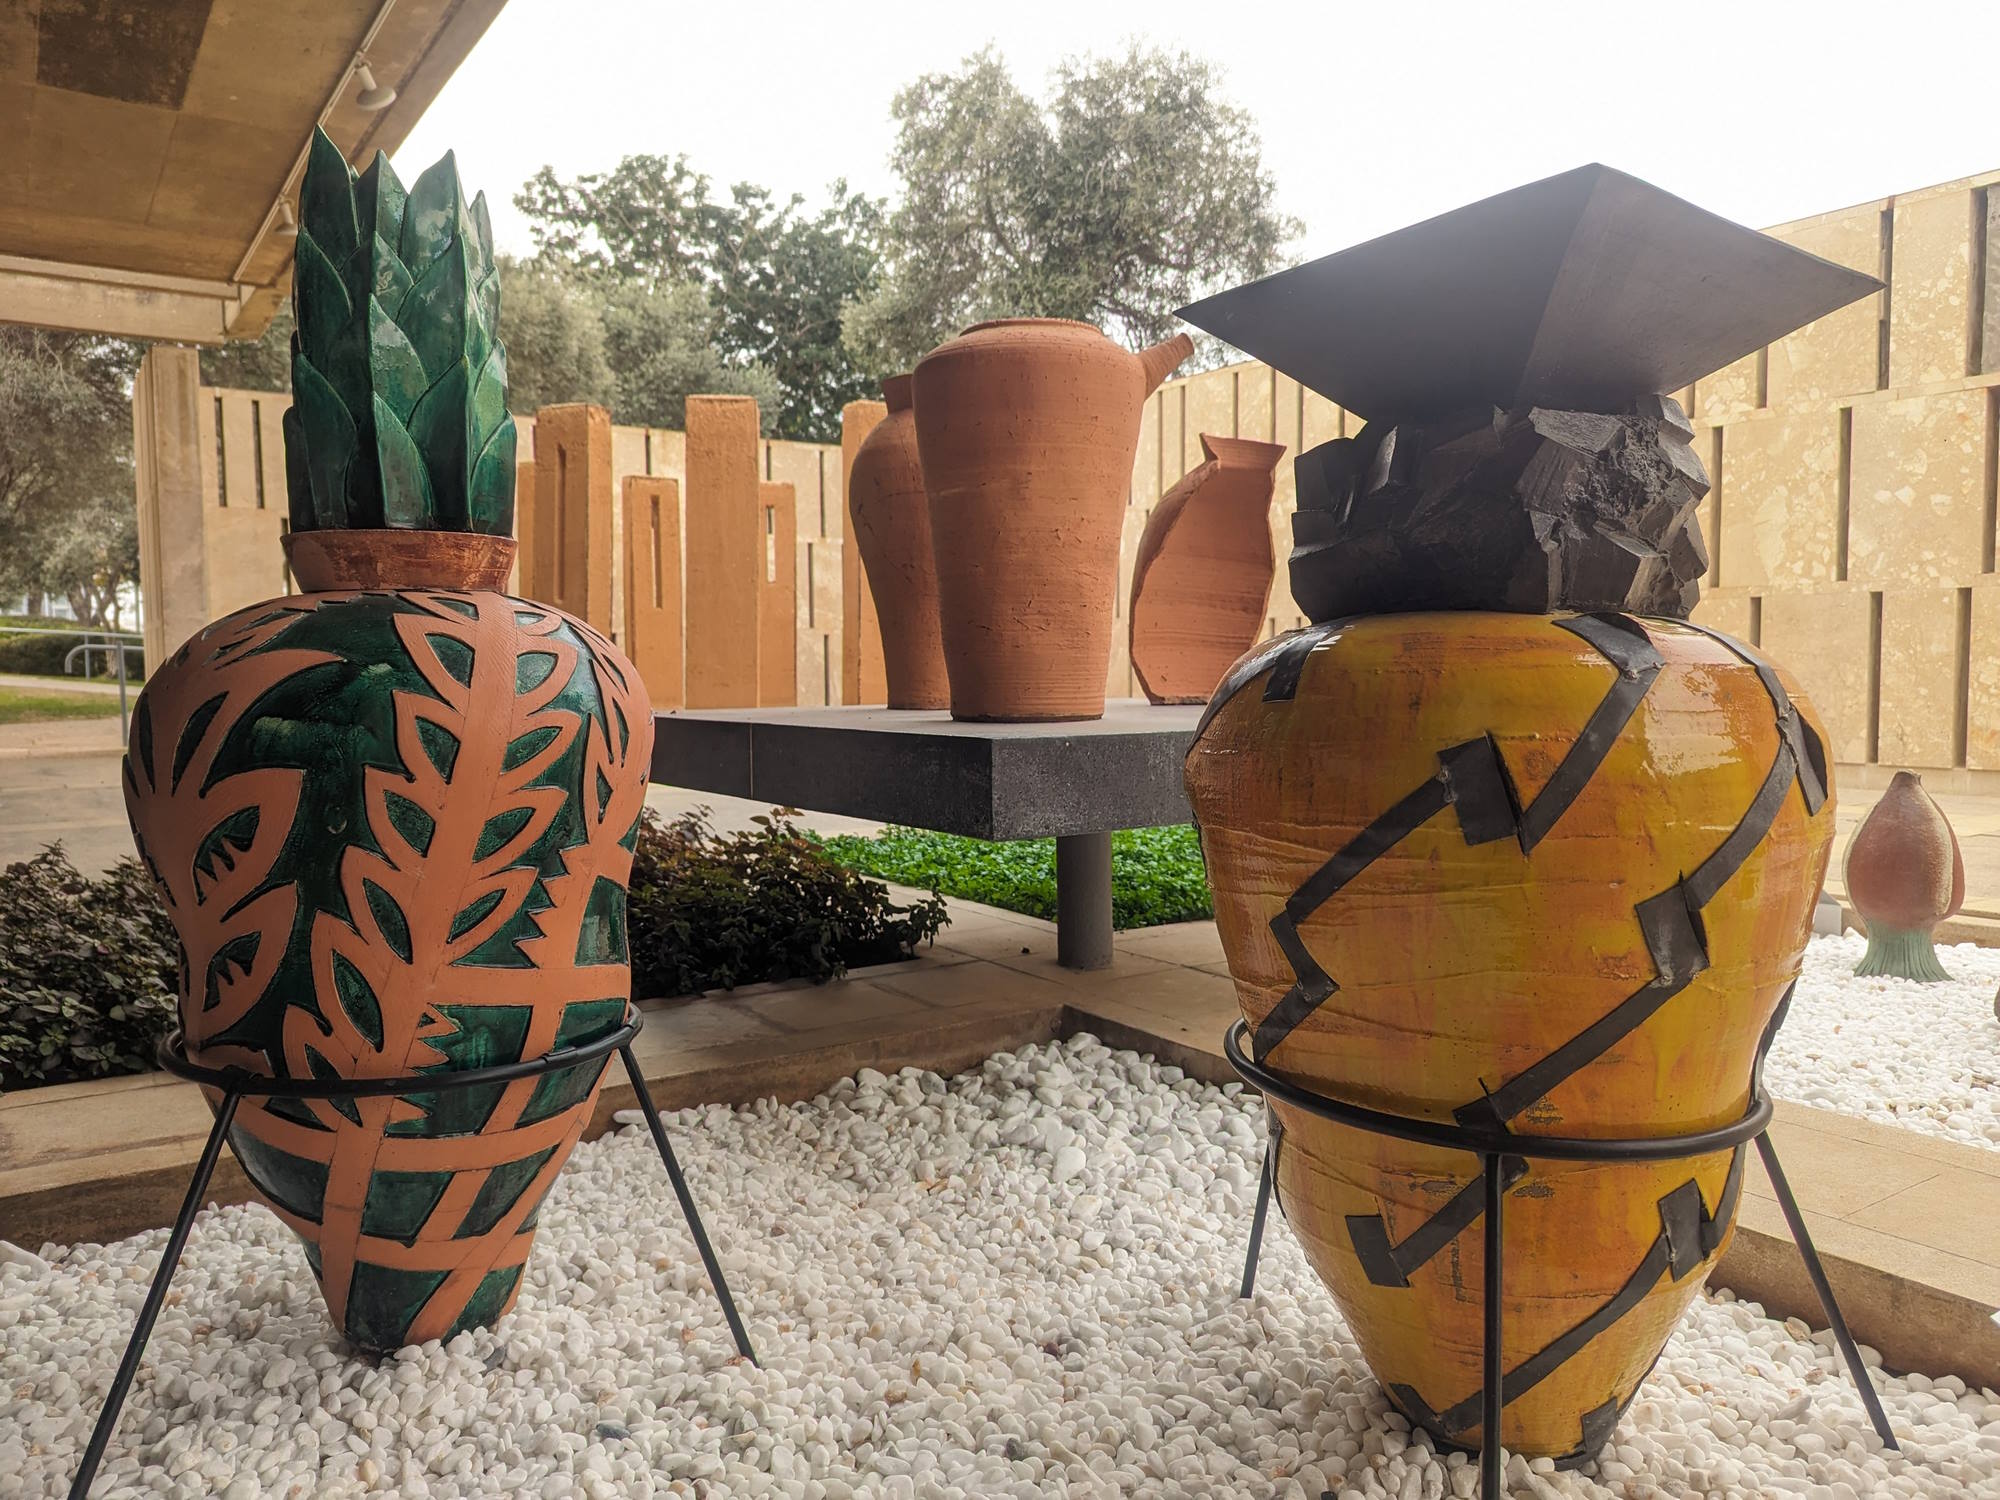 Lidia Zavadsky's "T’ang pot" and "Wine jug" at the Ceramics Pavilion Courtyard